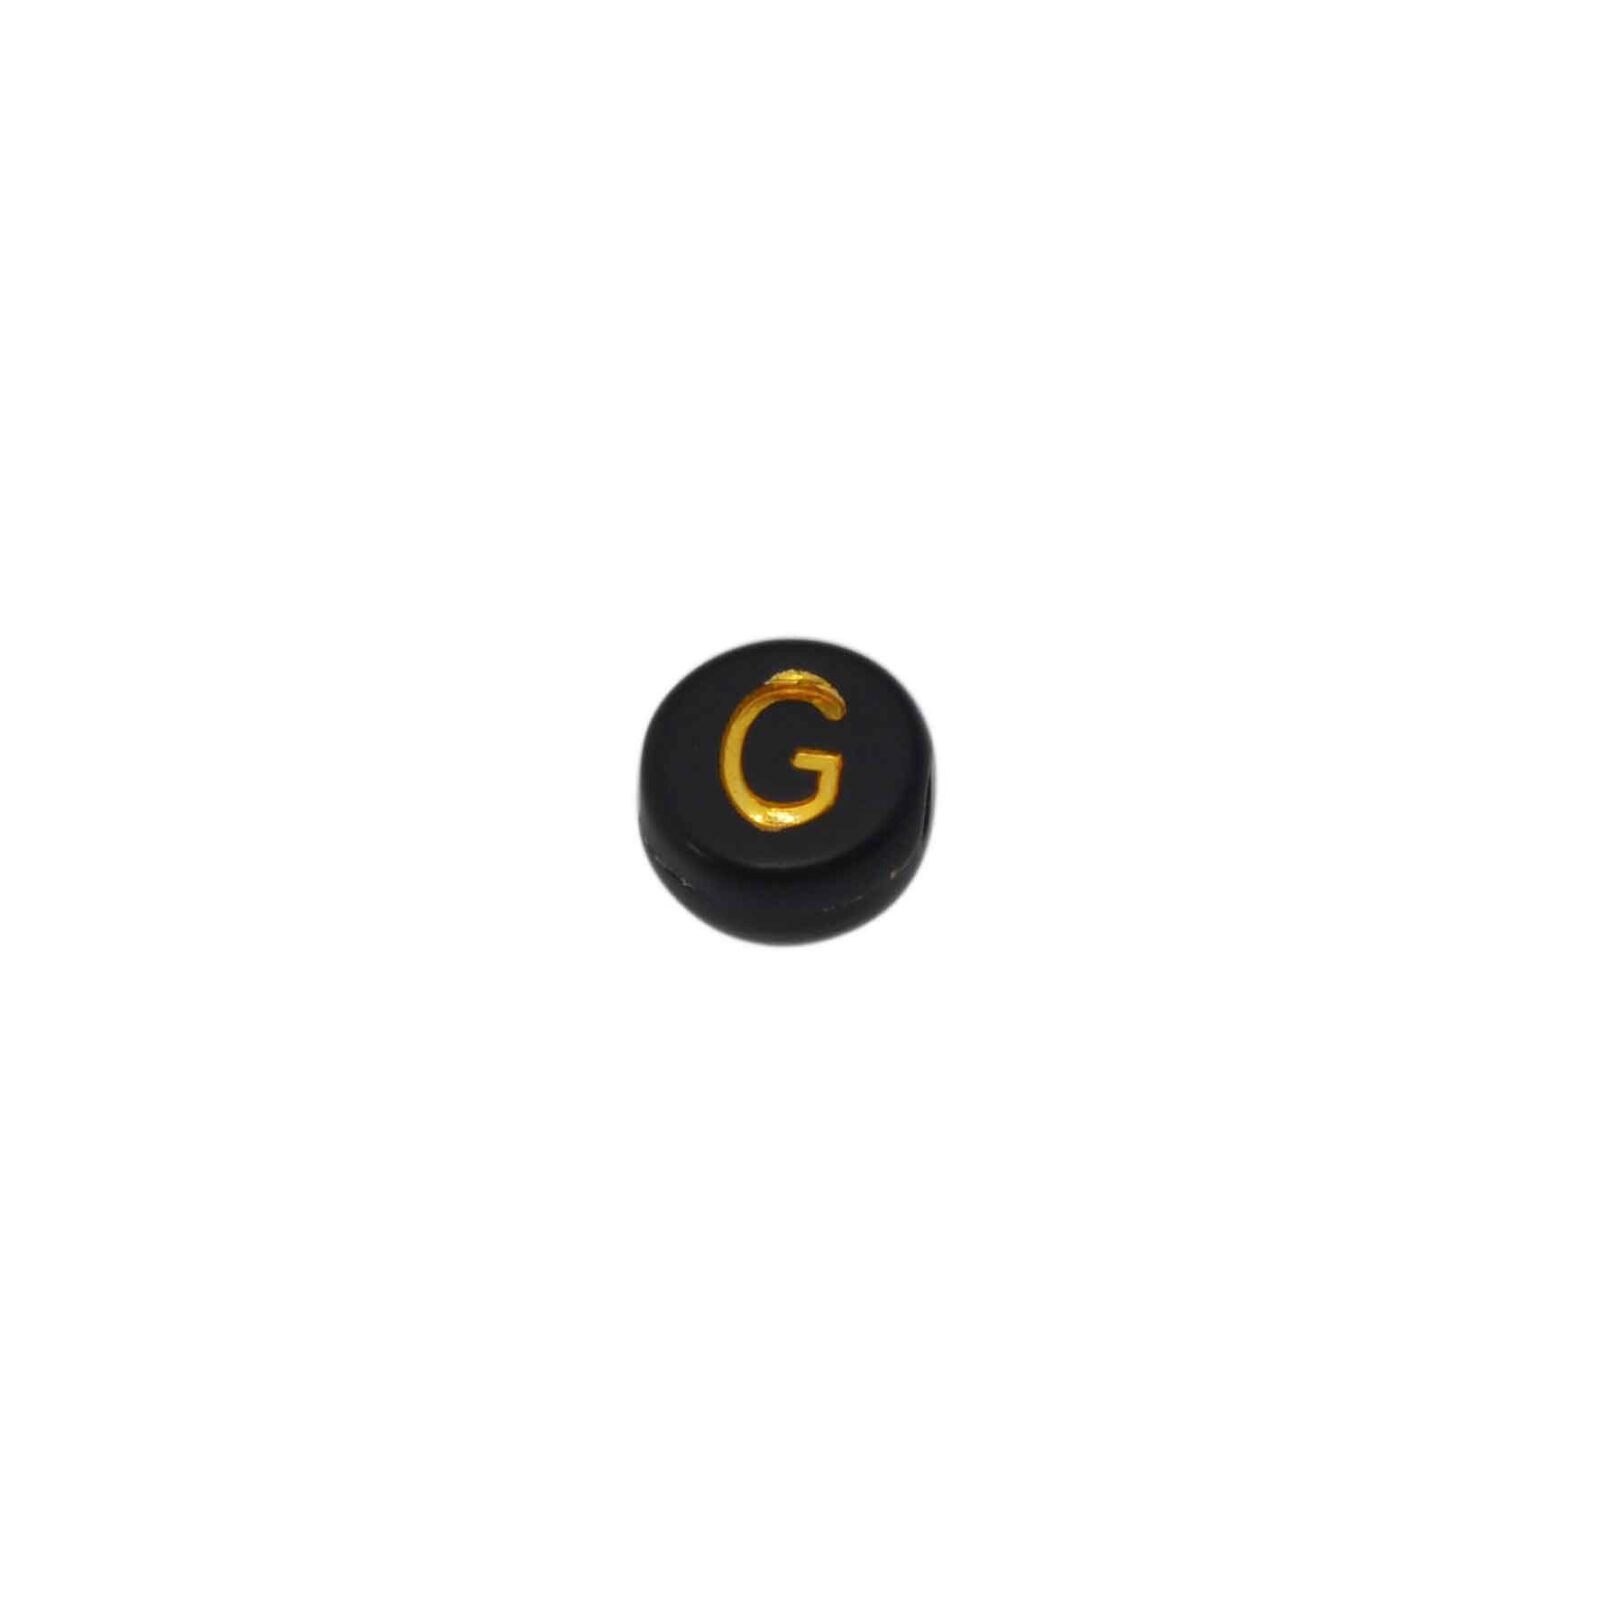 Zwarte ronde letterkraal G